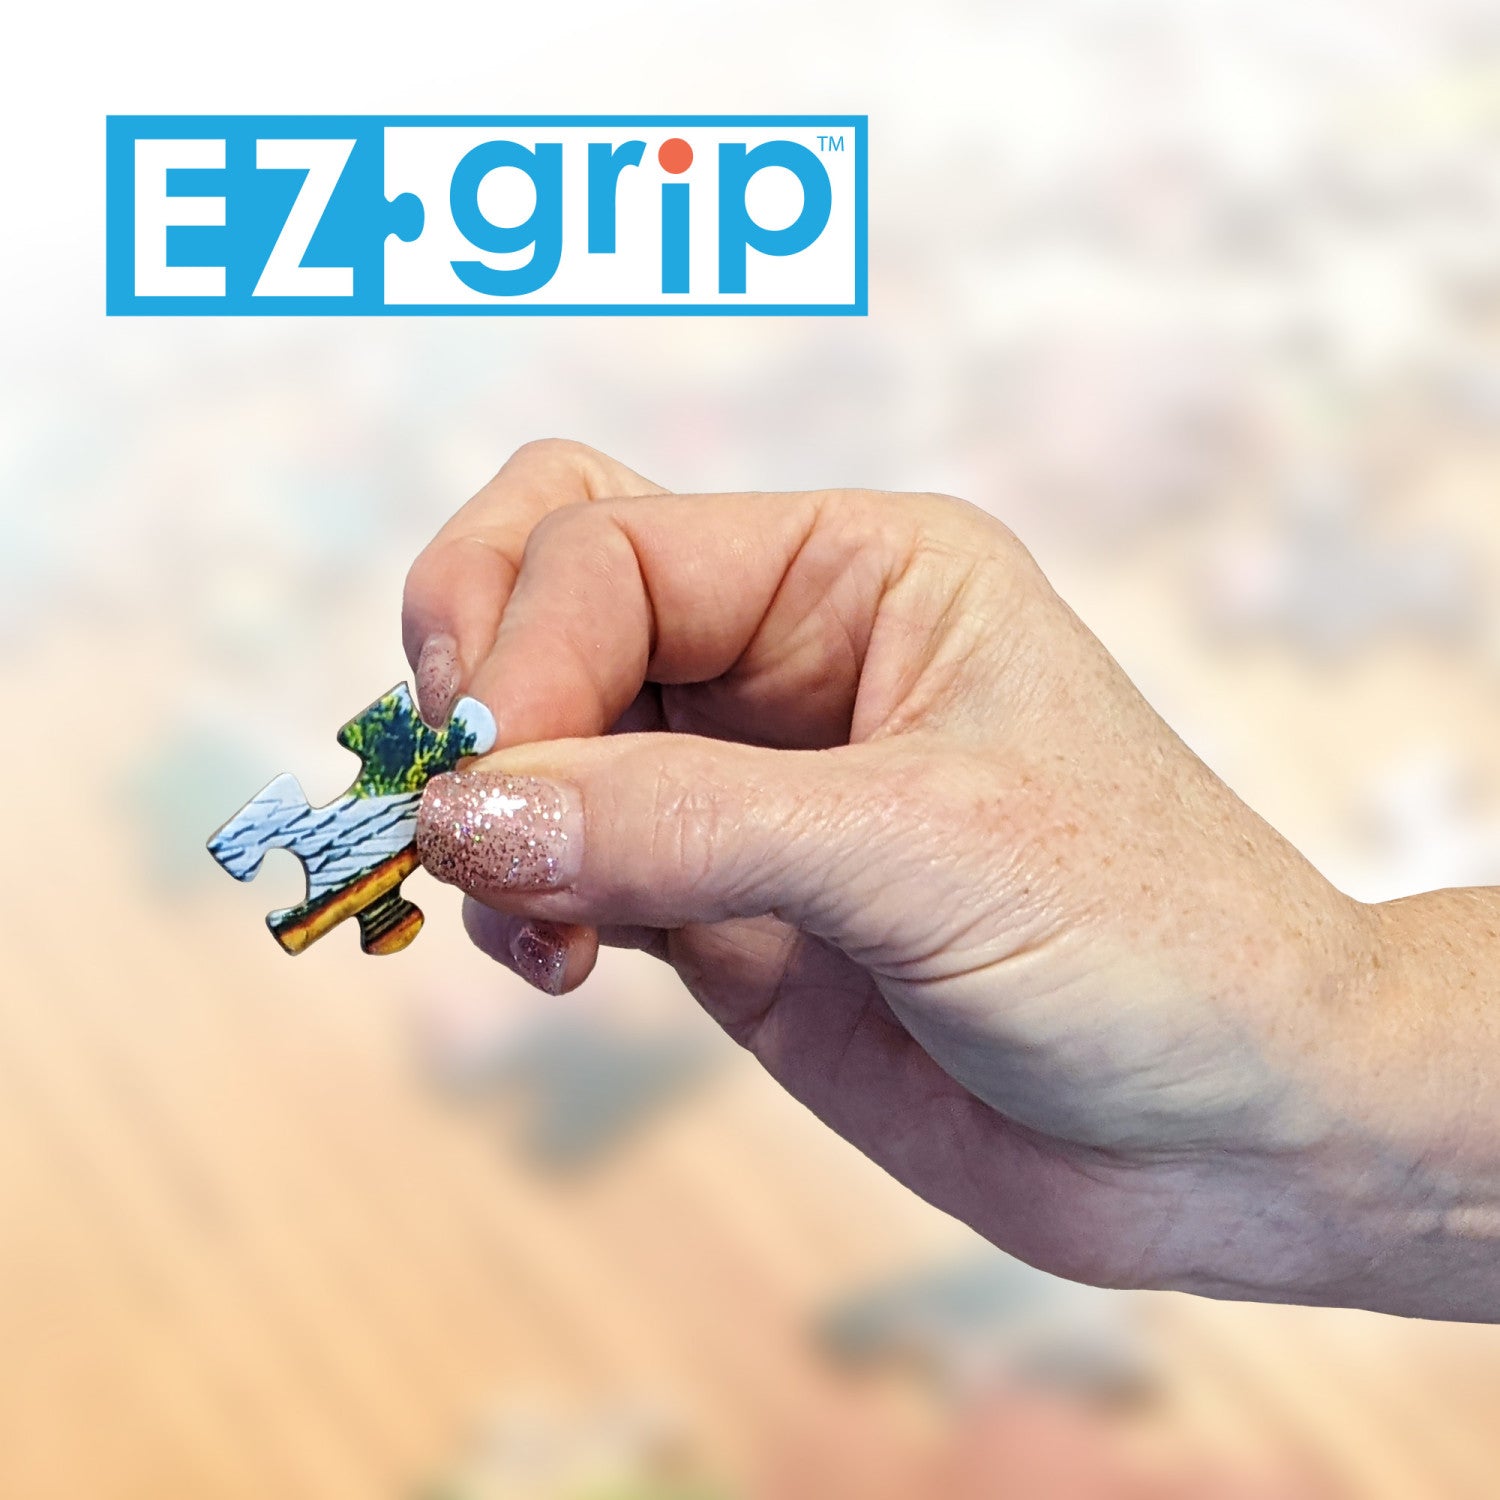 Cutaway - Hometown Market 1000 Piece EZ Grip Jigsaw Puzzle